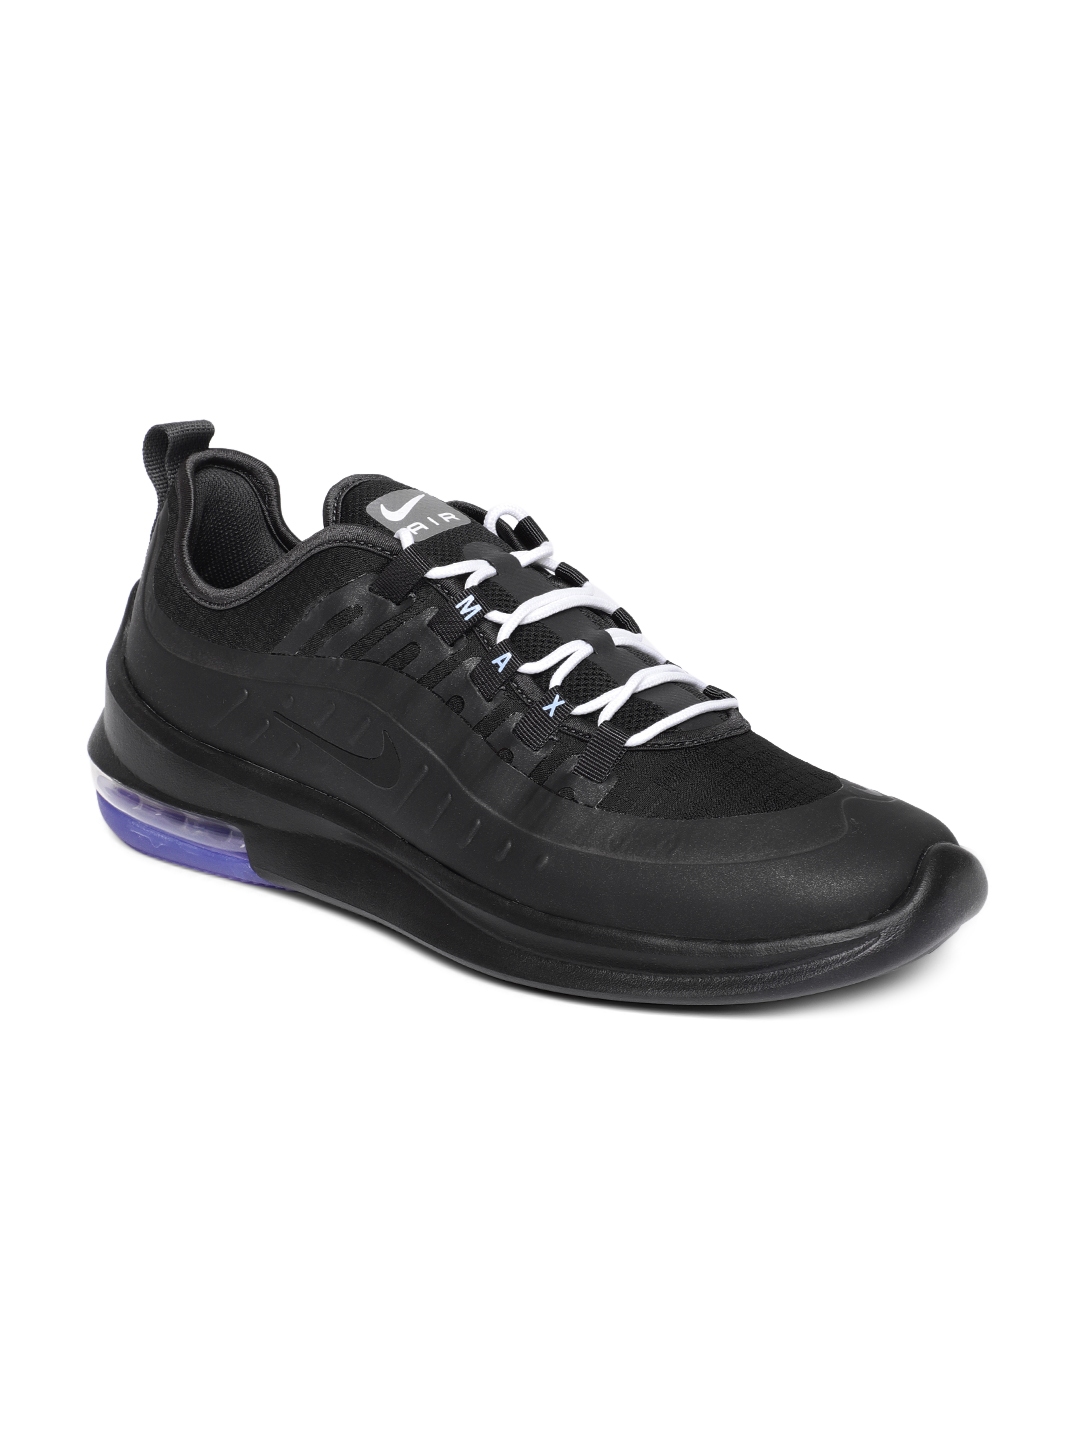 Nike Men Black Air Max Axis Premium Sneakers - Casual Shoes for Men 8987257 | Myntra